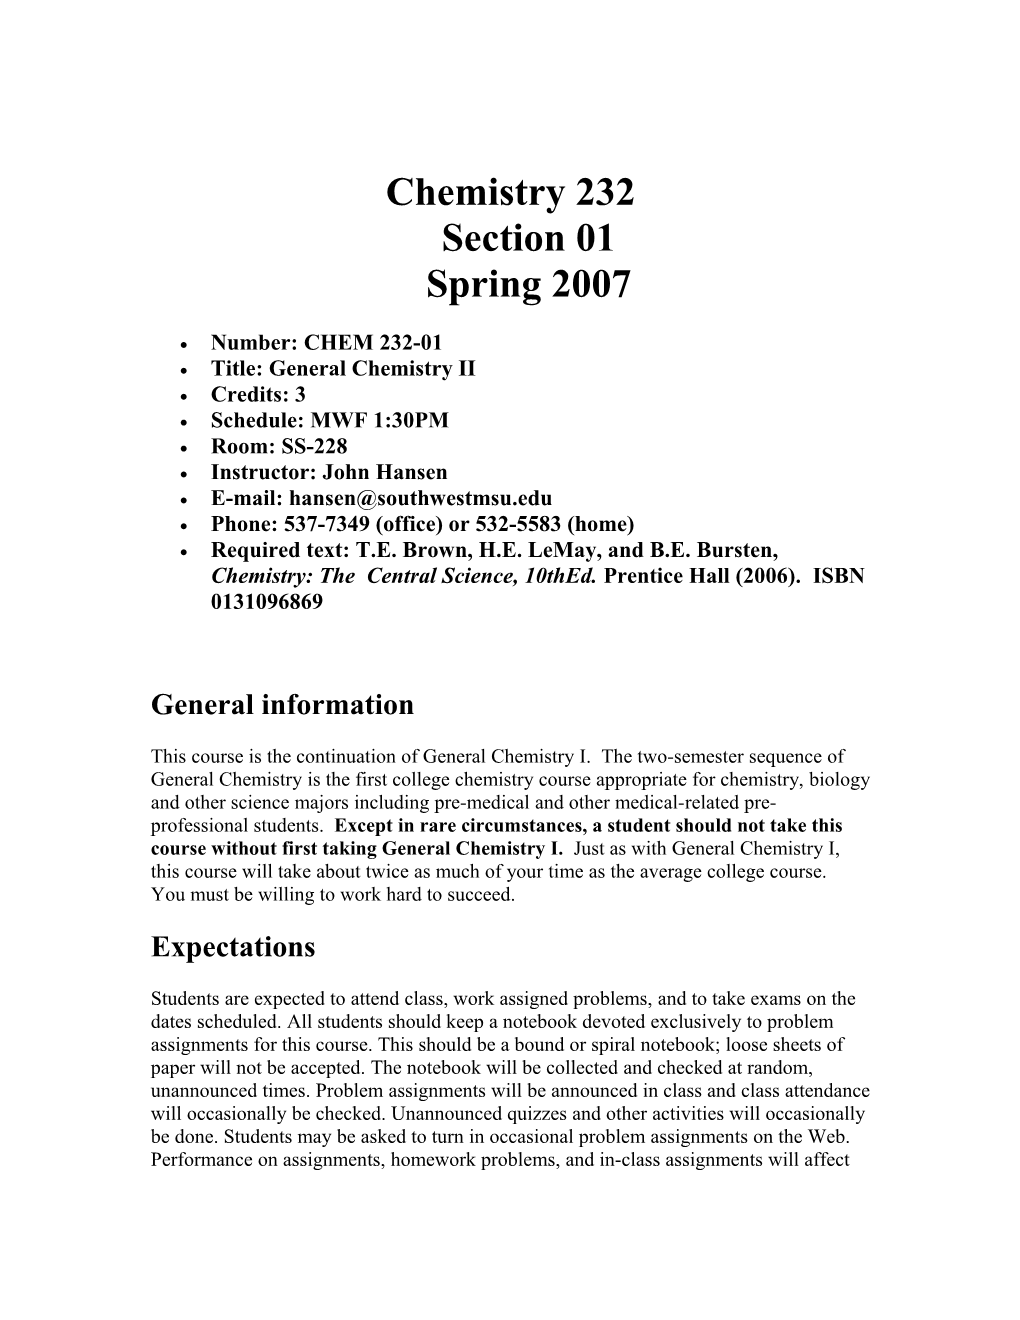 Title: General Chemistry II